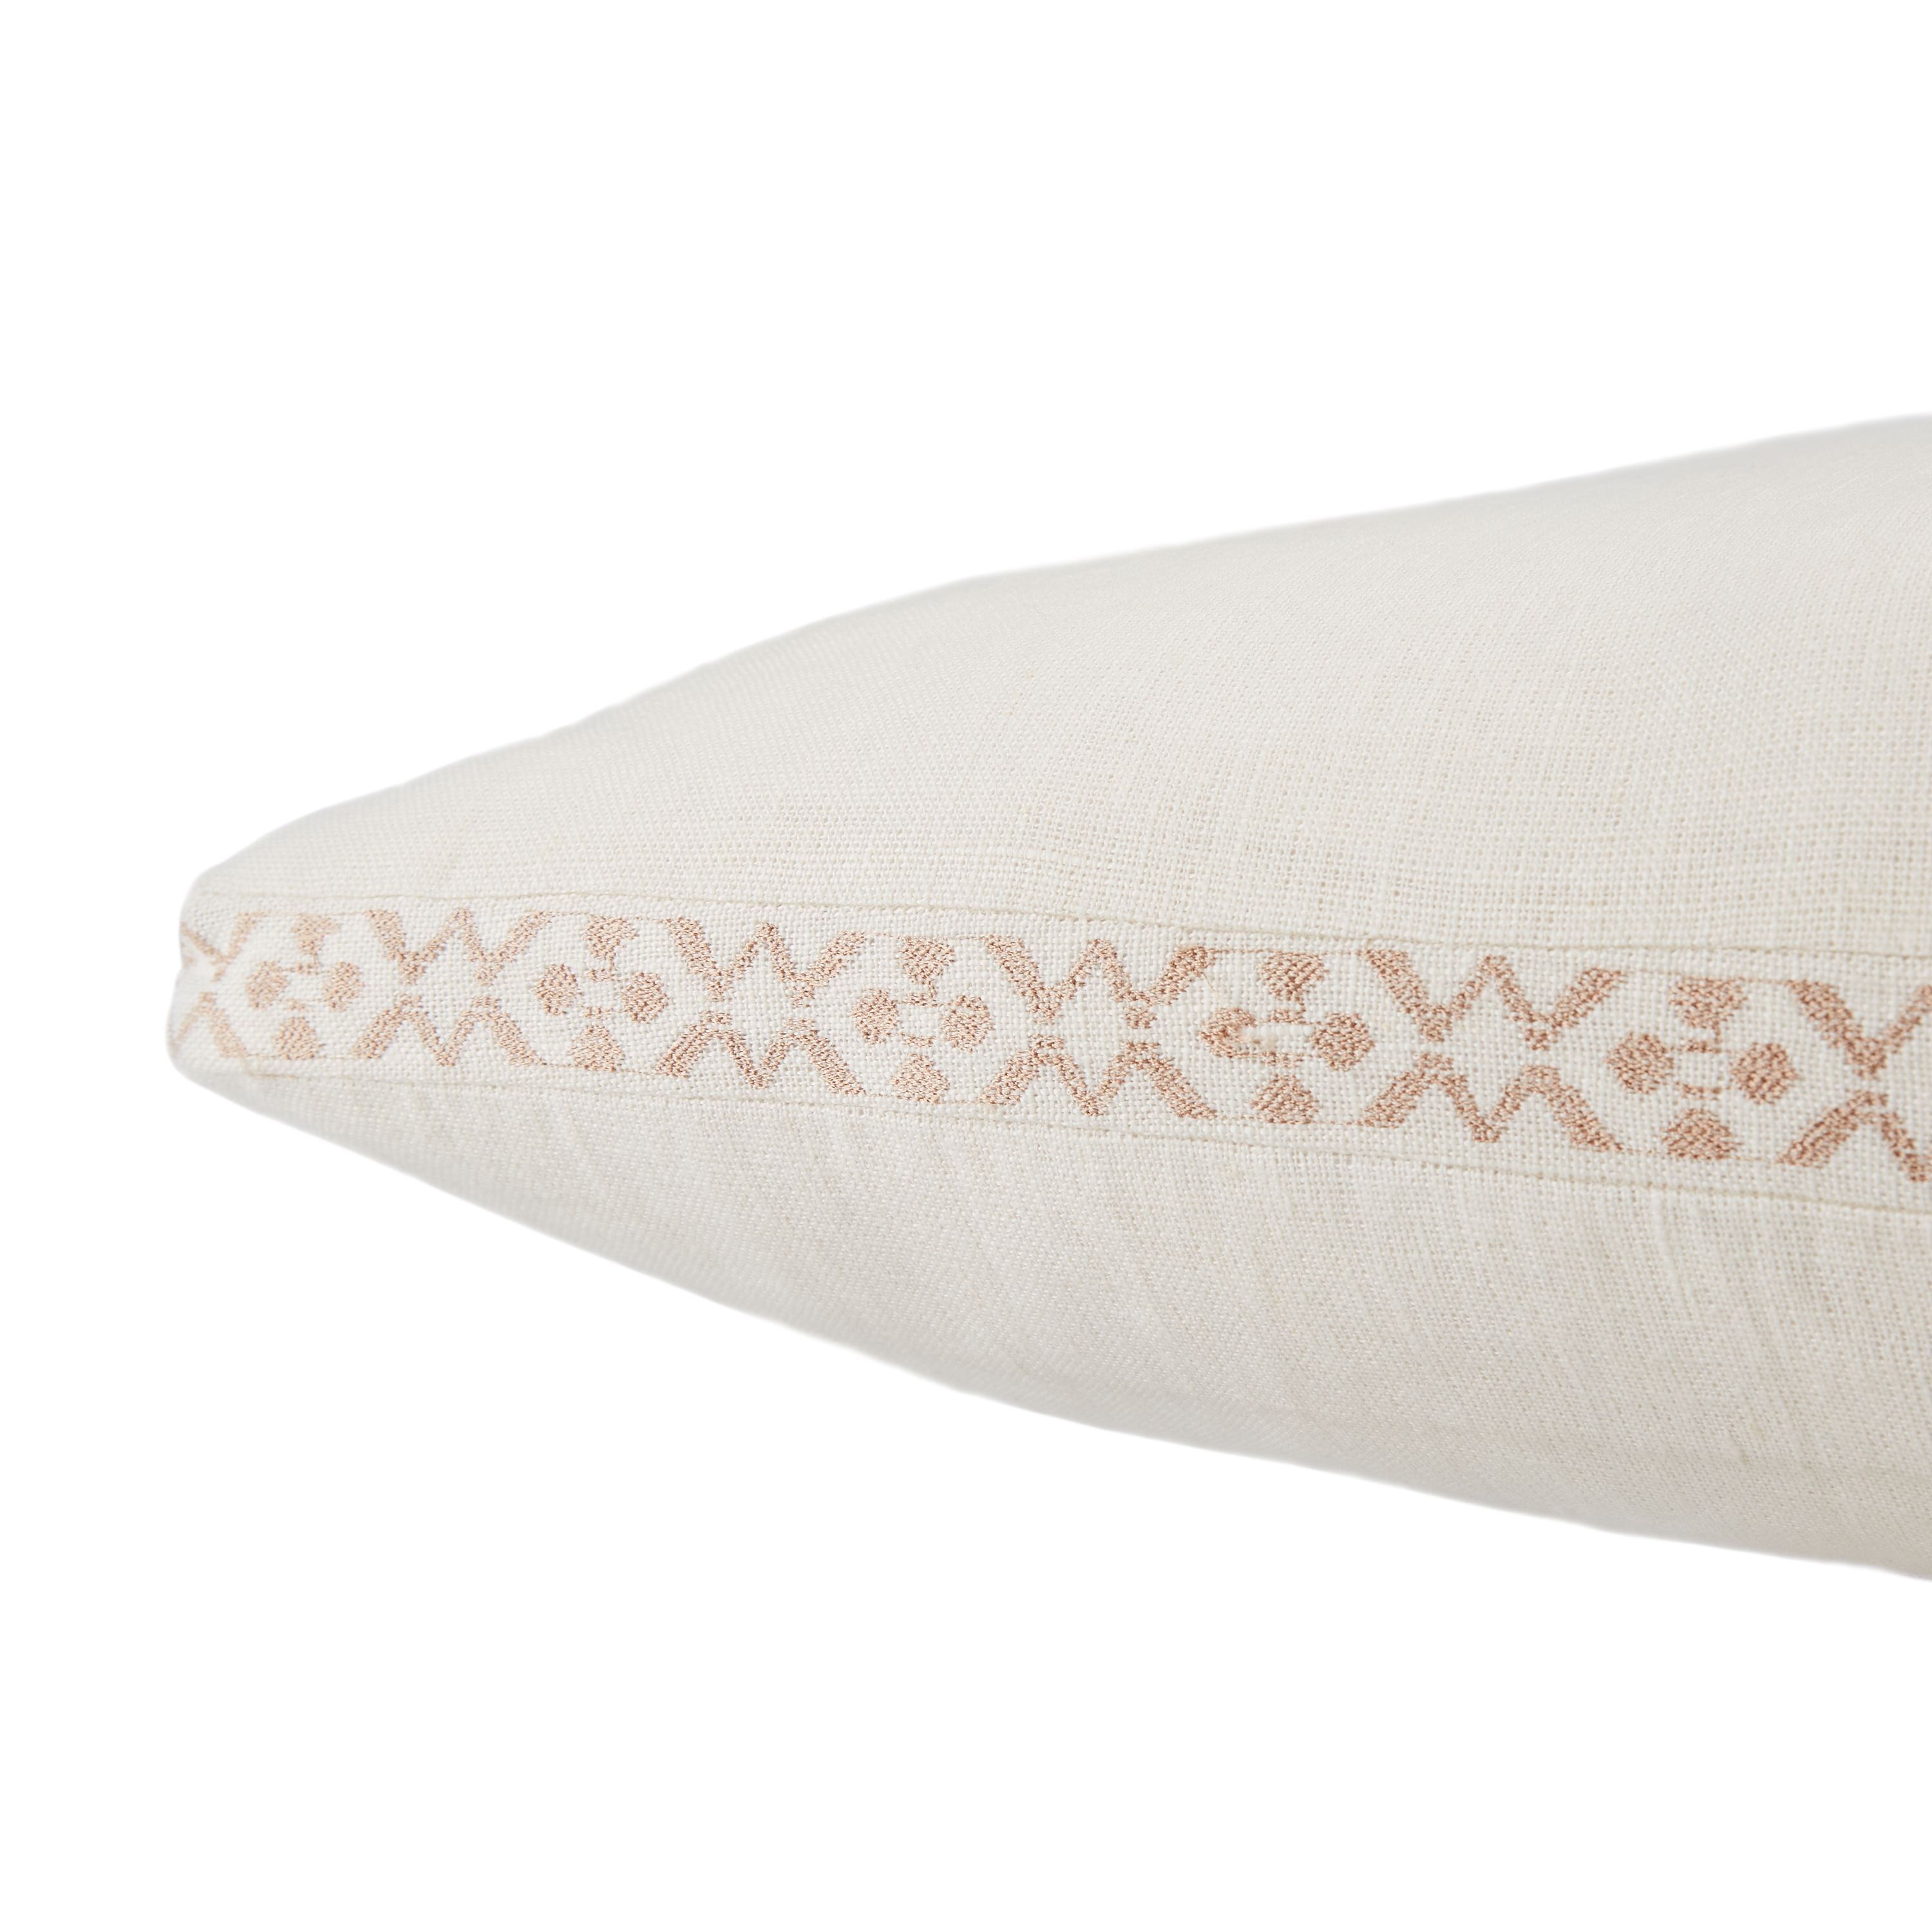 Design (US) Ivory 24"X24" Pillow - Image 2